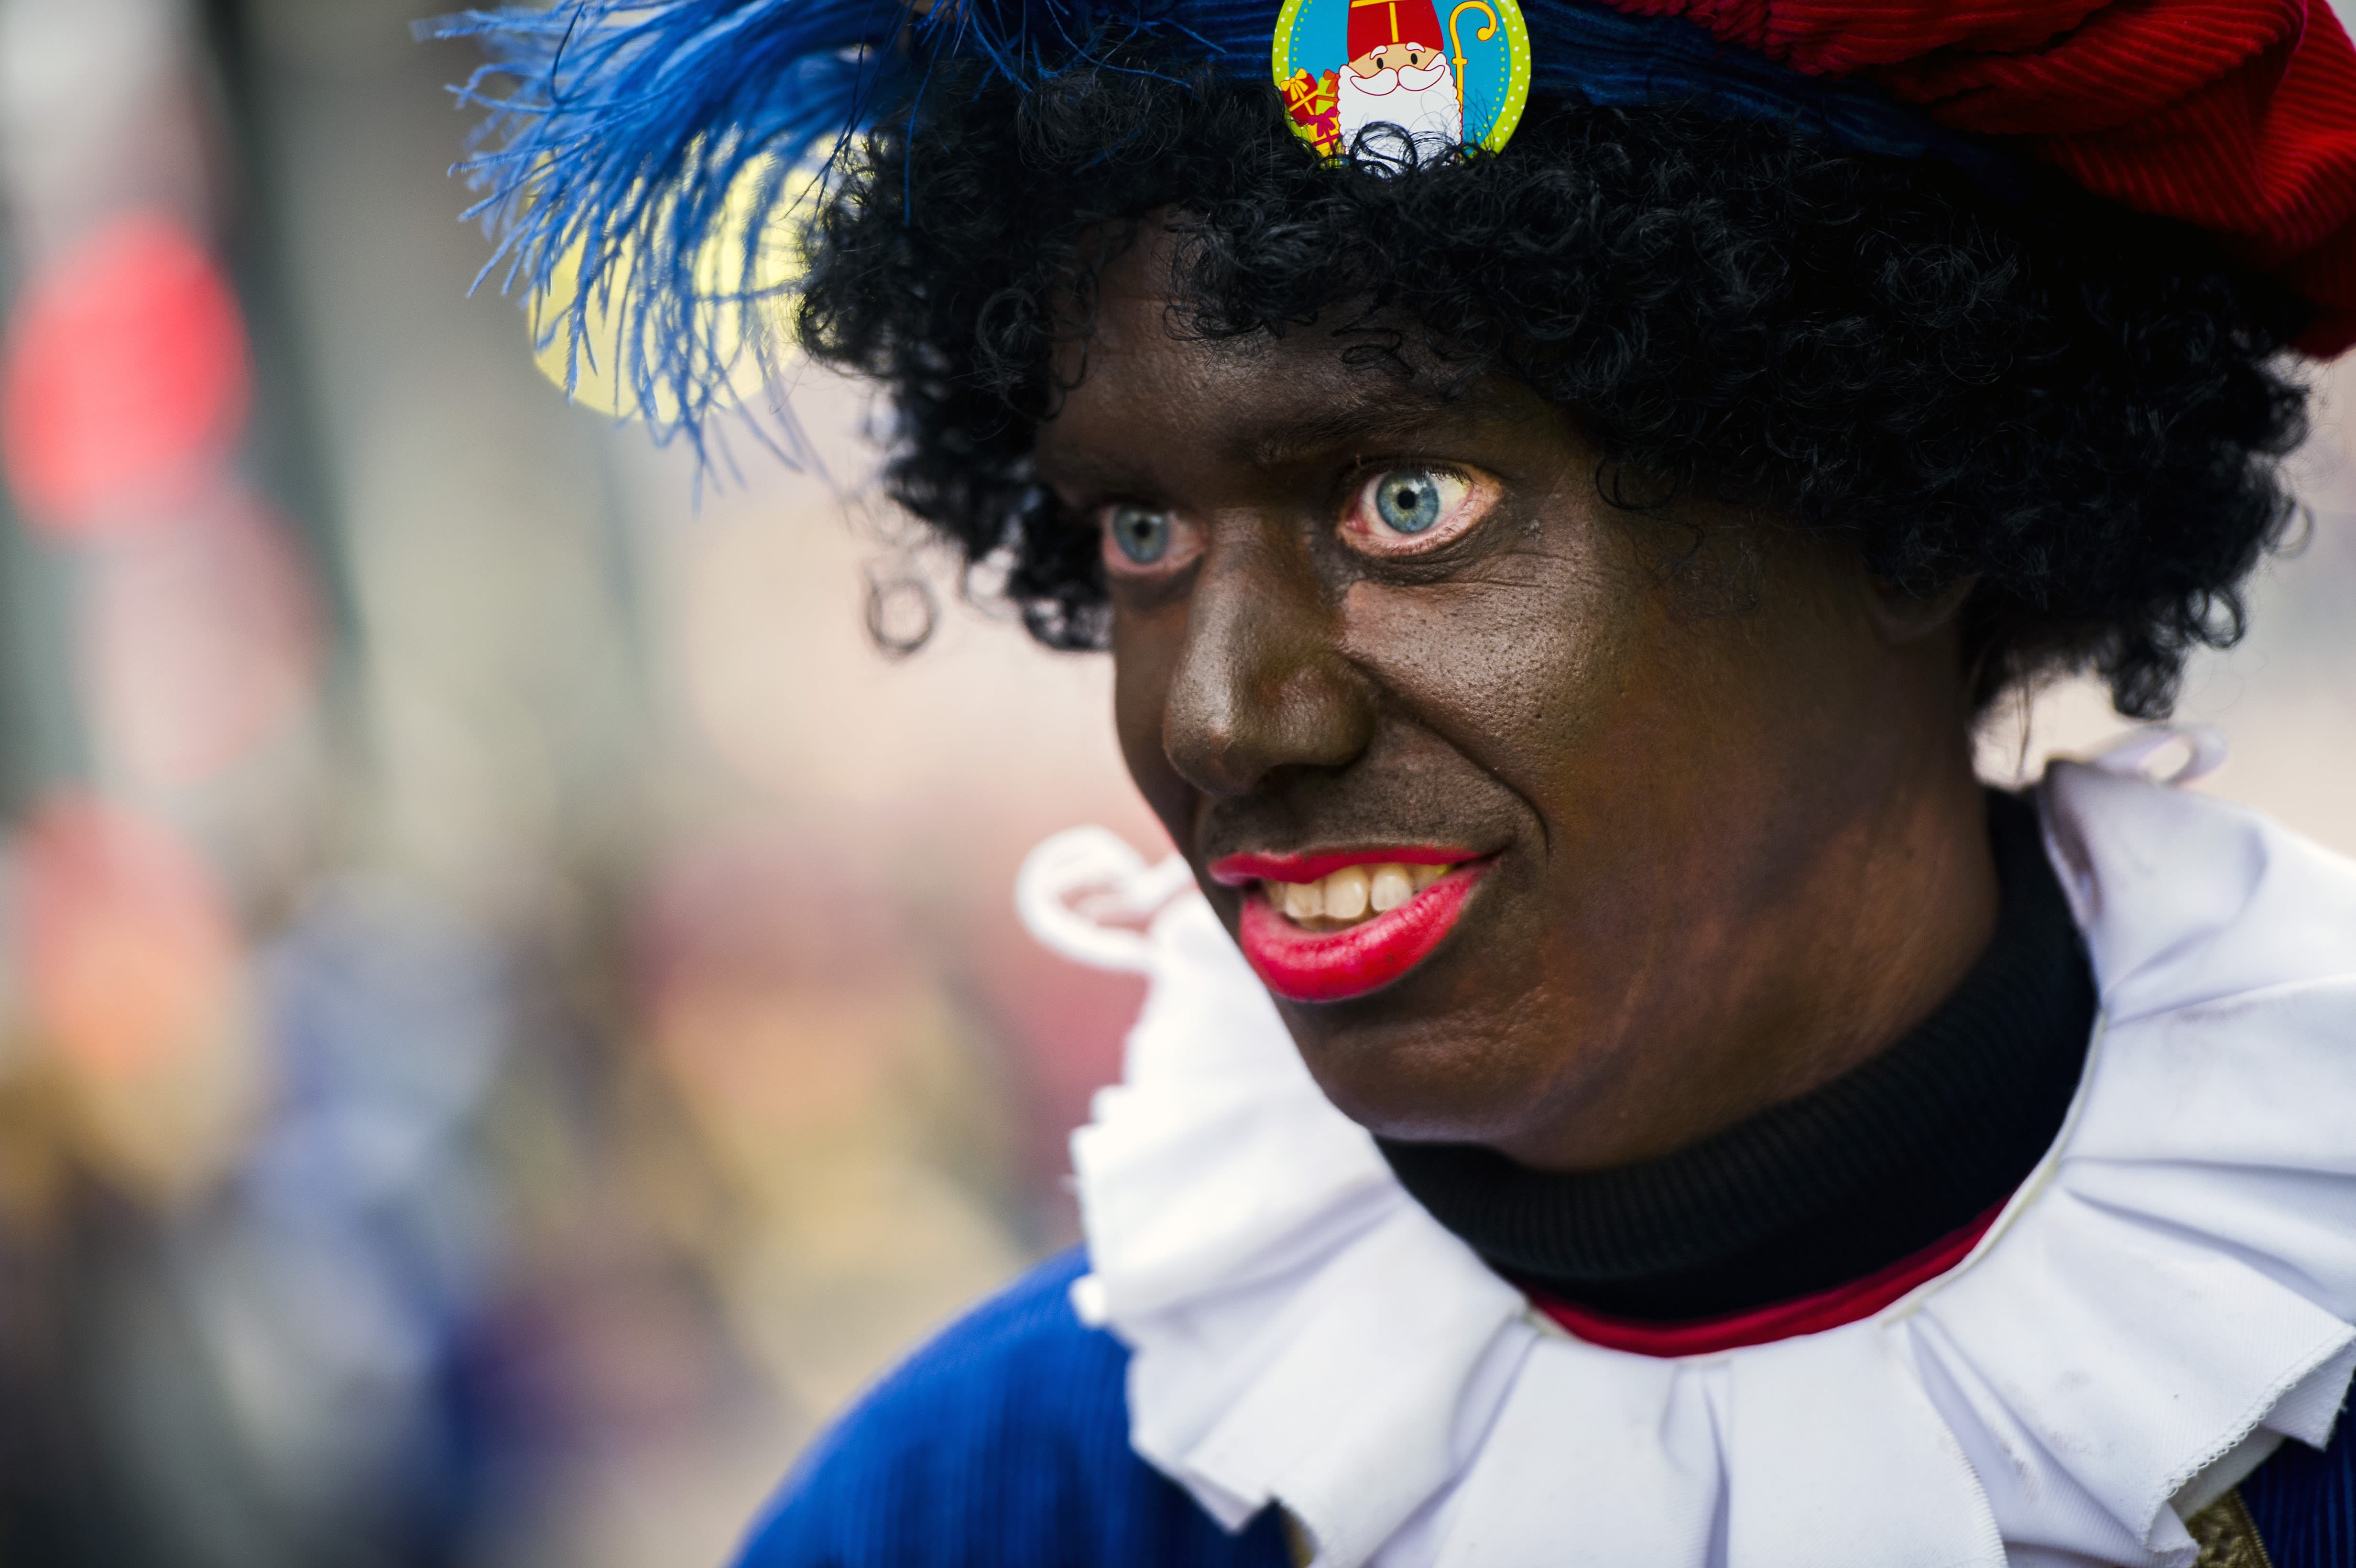 Collega ga zo door Verstelbaar Blackface': Dutch holiday tradition or racism? | CNN